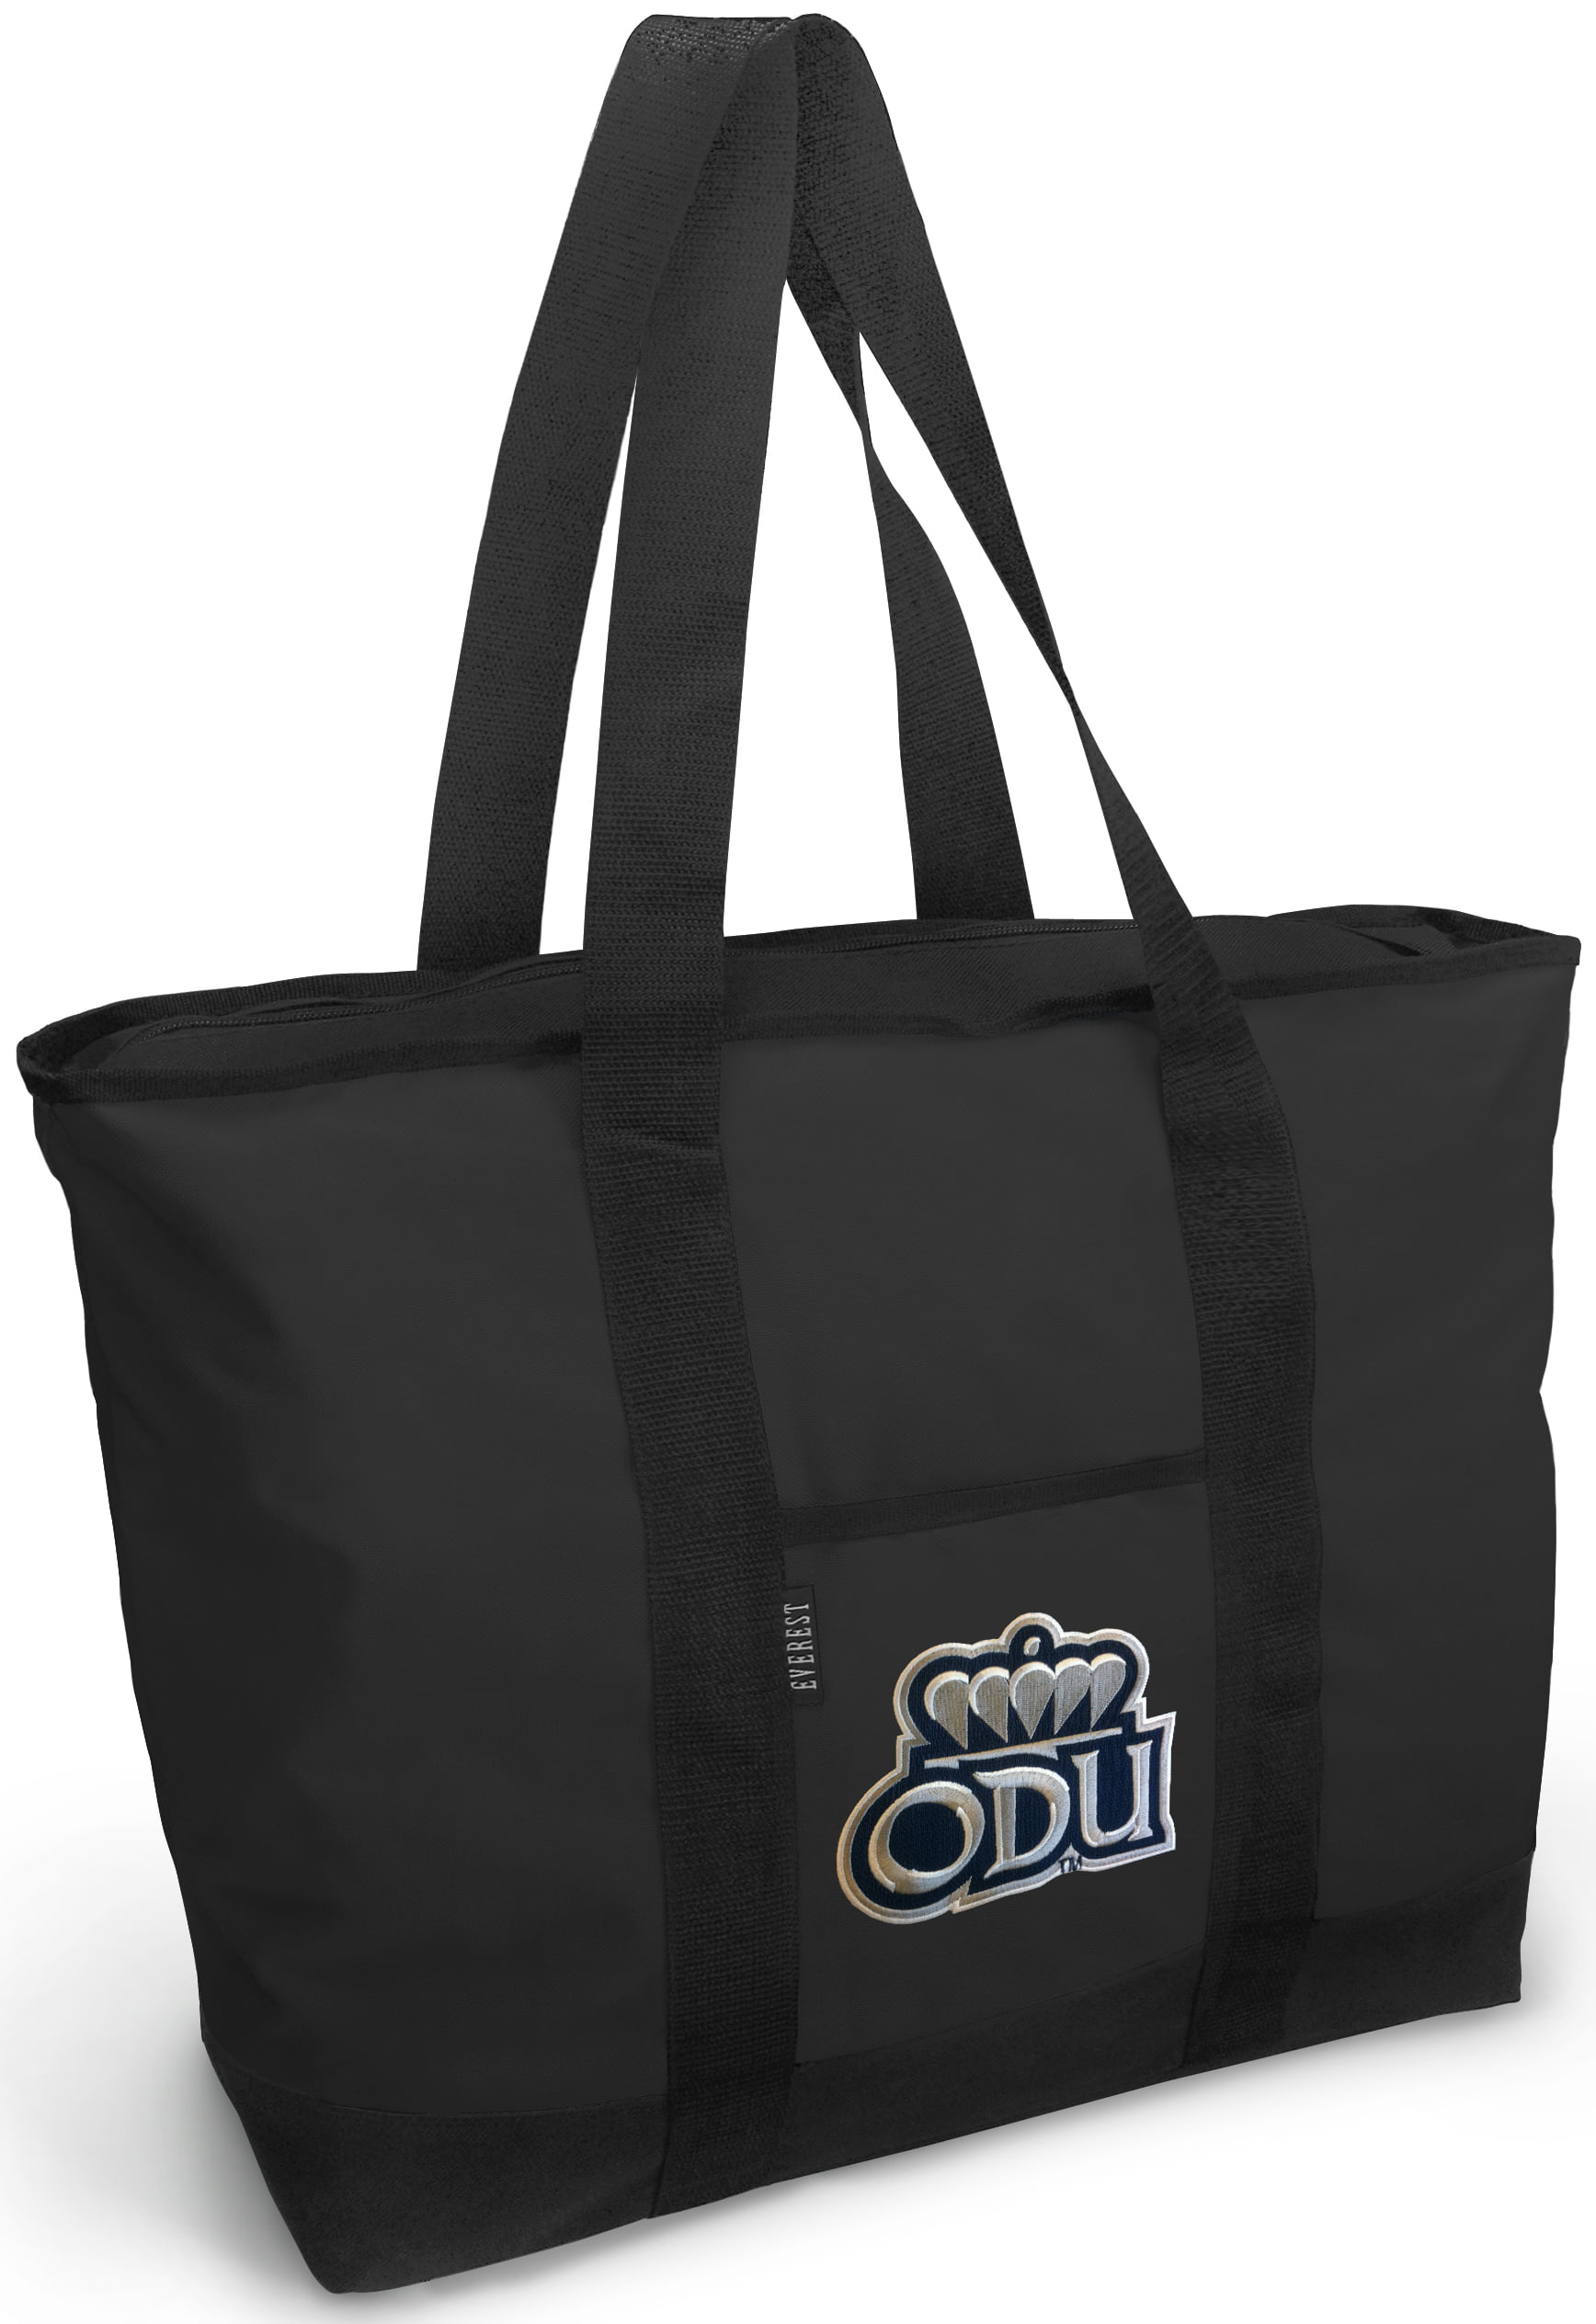 ODU Tote Bag Ladies Old Dominion University Totes 